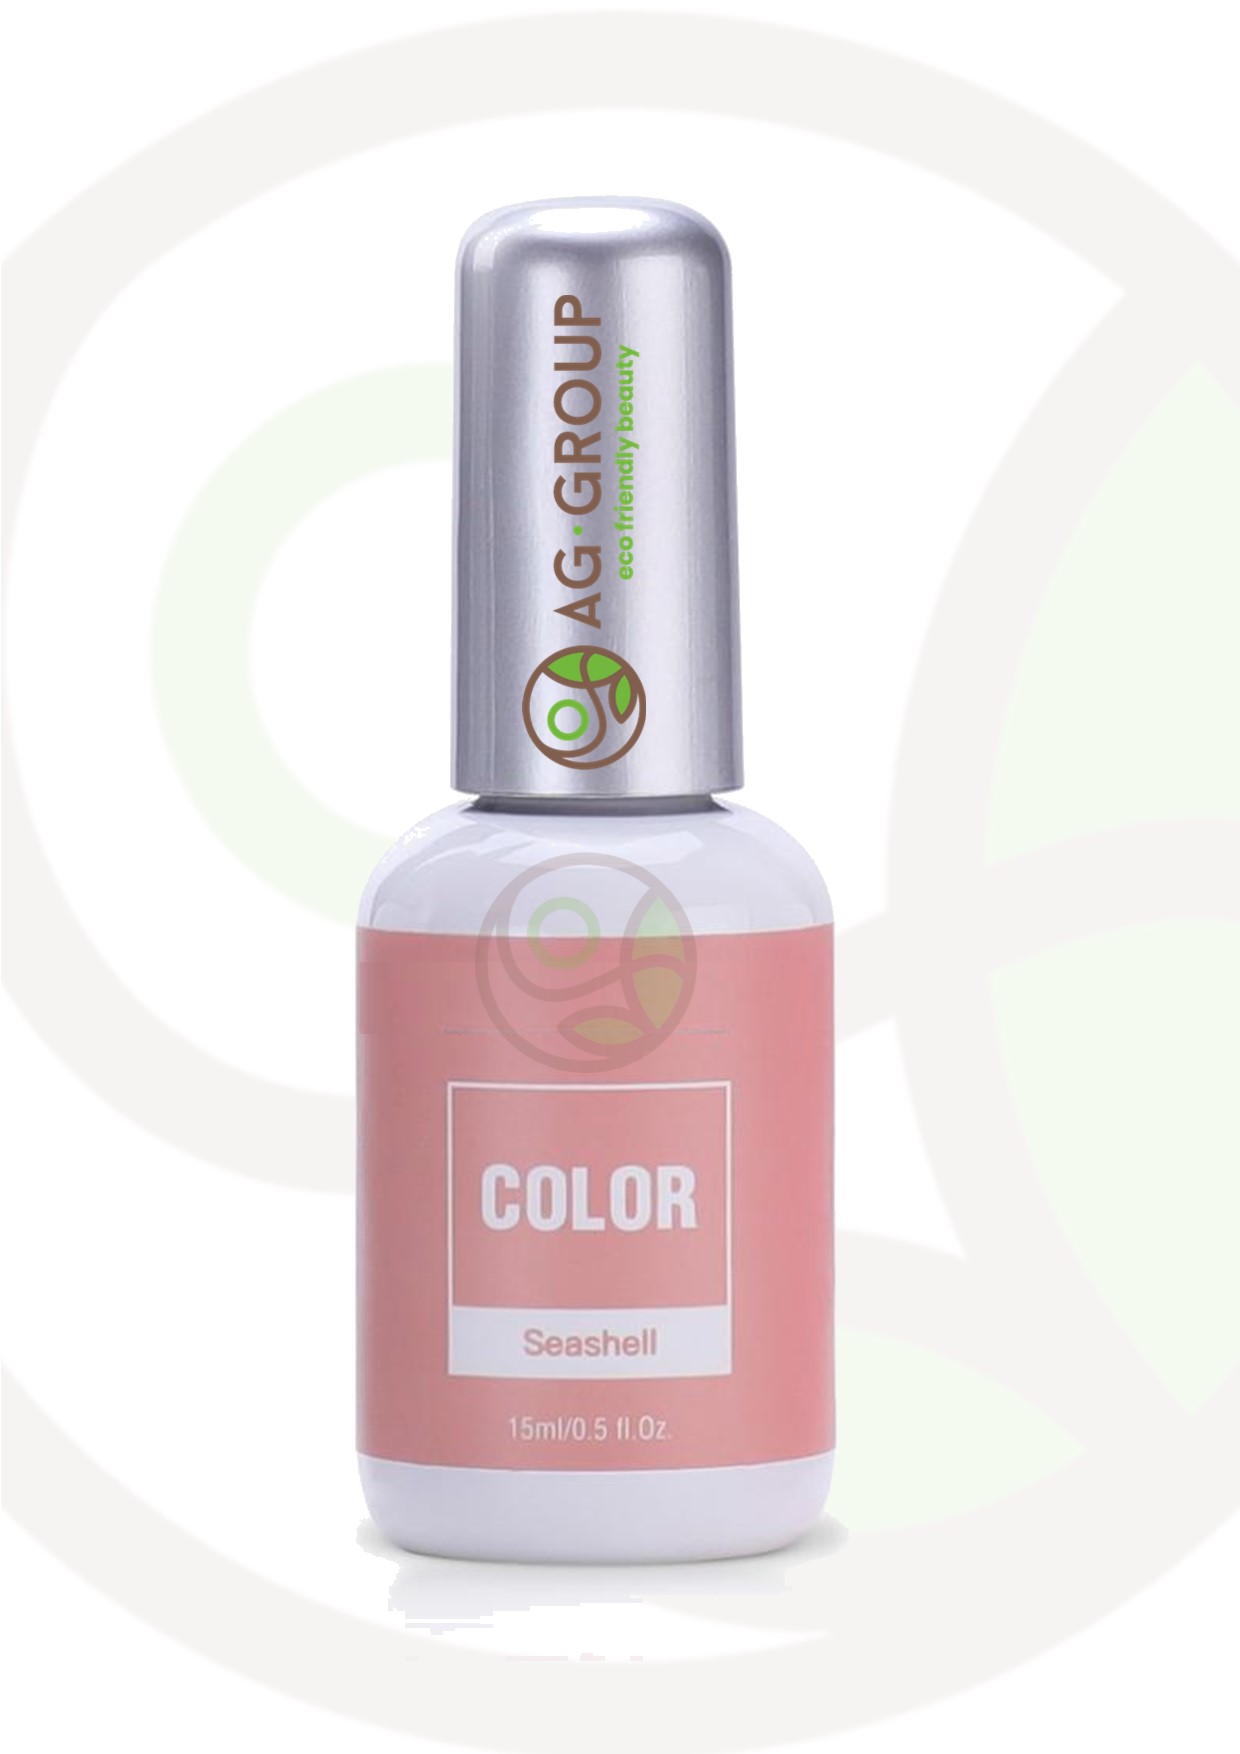 Featured image for “Gel polish soak -off led/uv- color seashell”